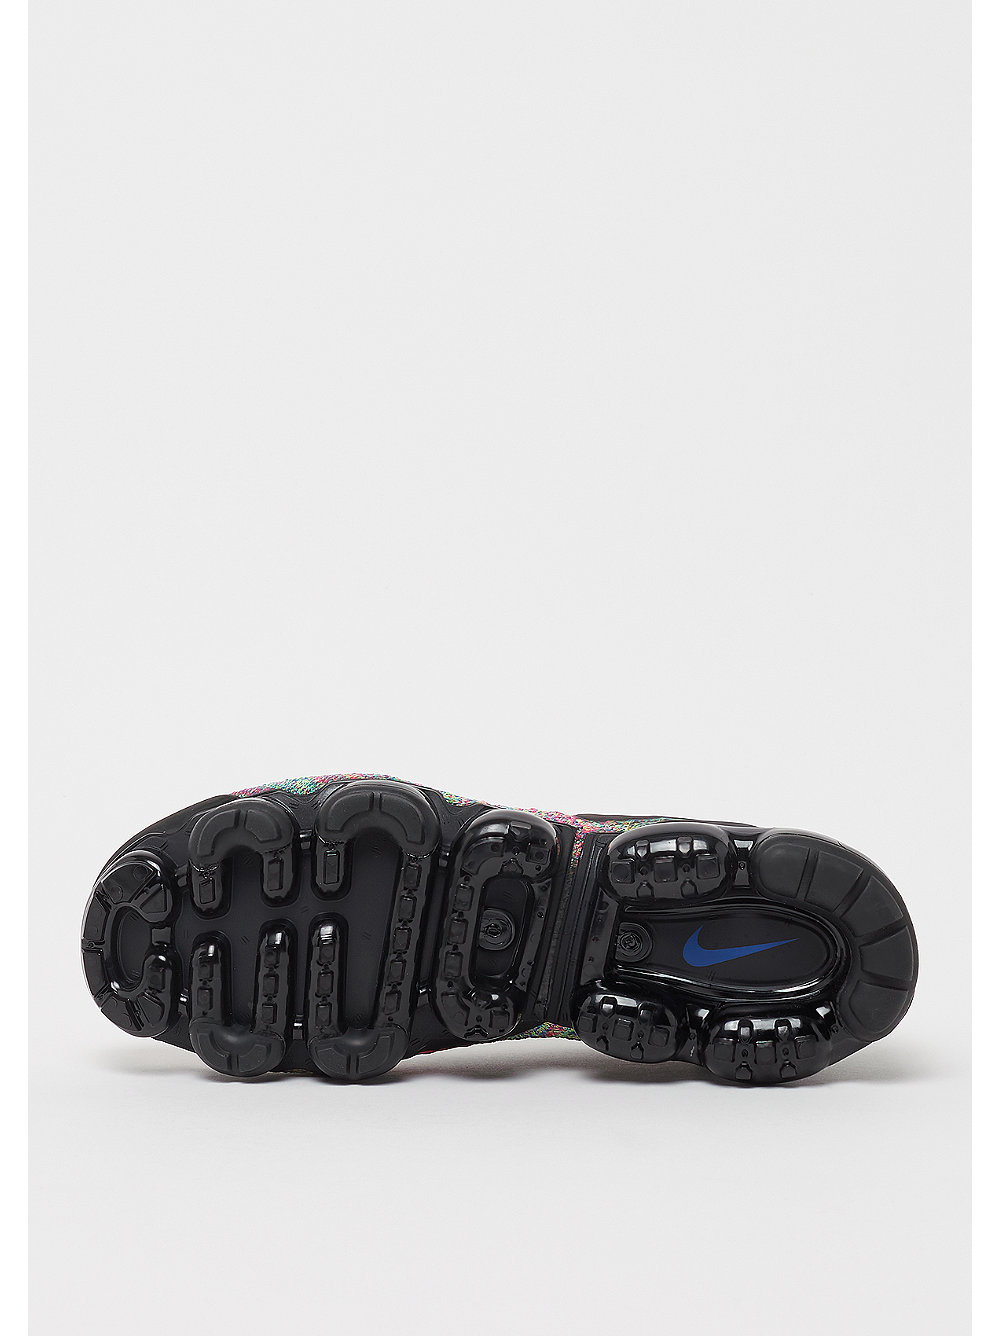 NIKE+VaporMax+Flyknit++black+Sneaker+bei+SNIPES--1672307_P3.jpg